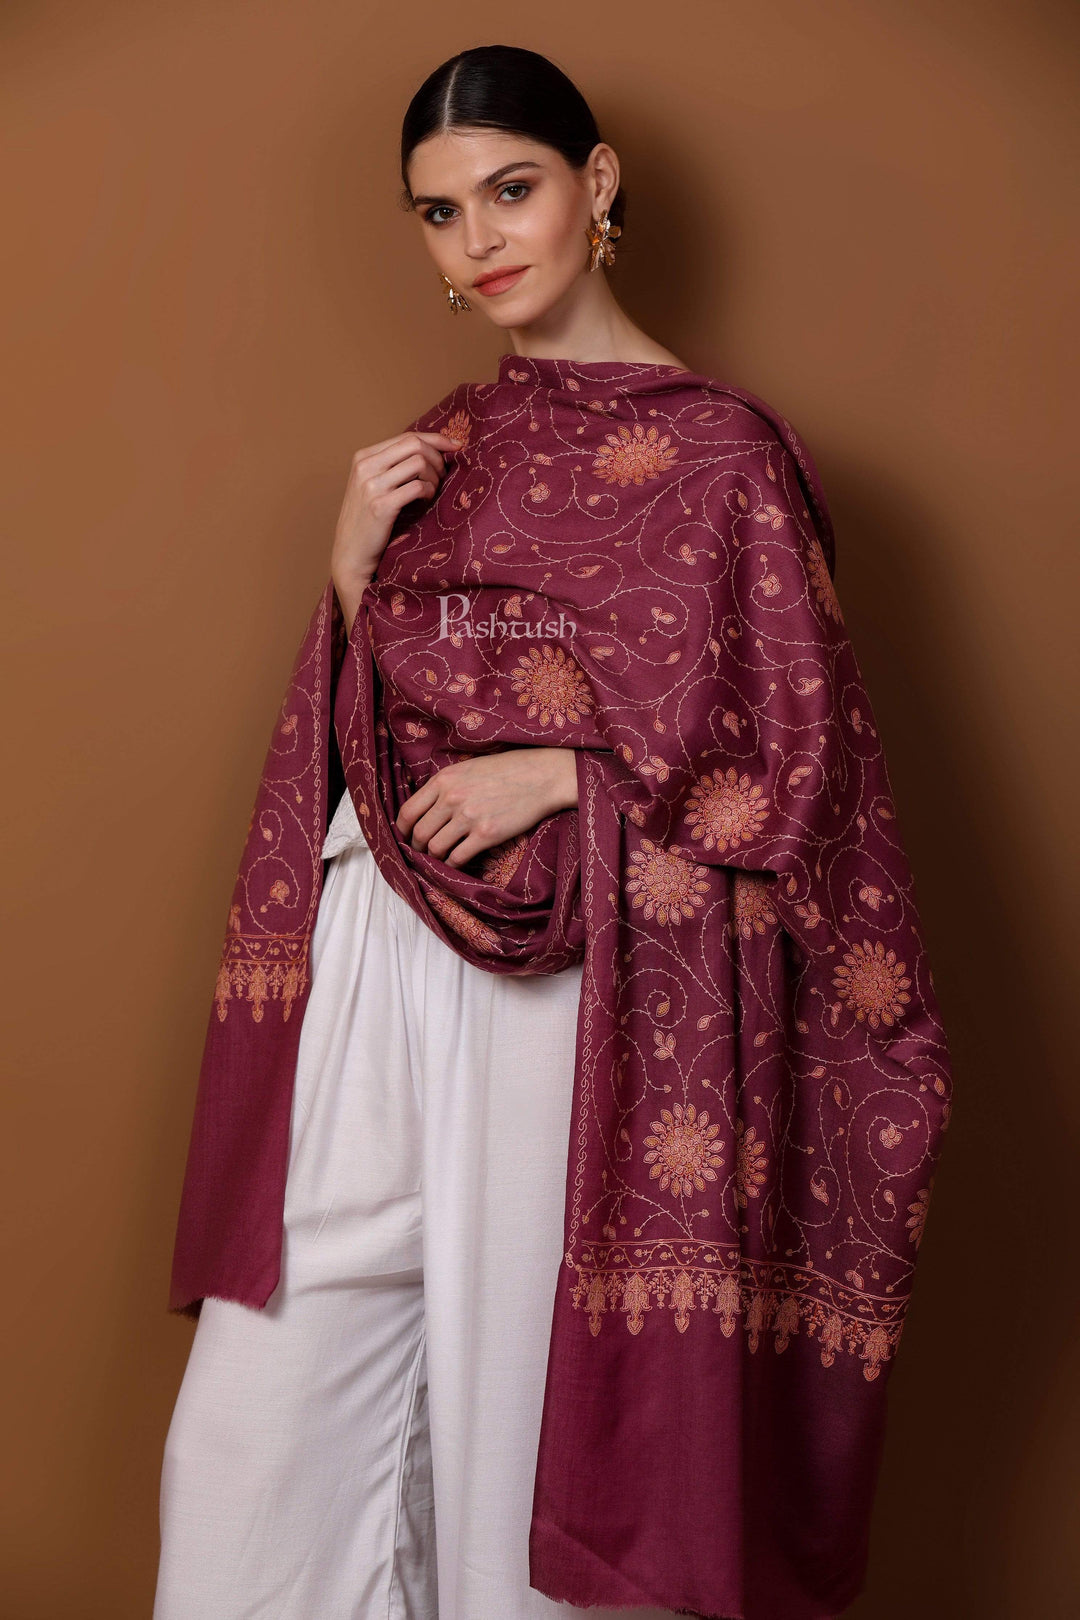 Pashtush India 100x200 Pashtush Womens Shawl, Tone on Tone Embroidery, Soft, Light and Warm, Peel Lilac